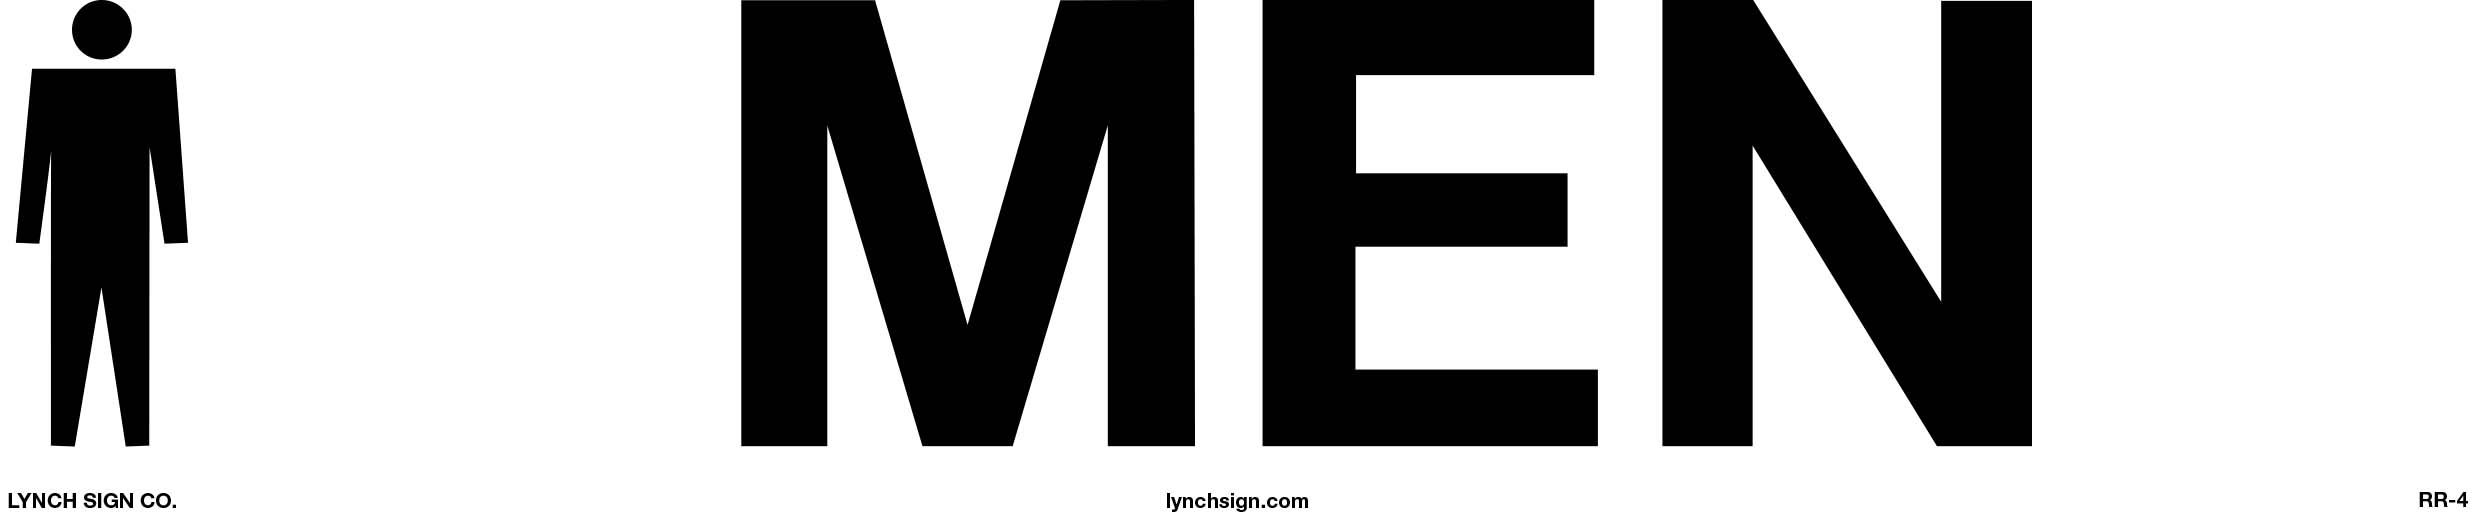 RR-4 – Lynch Signs